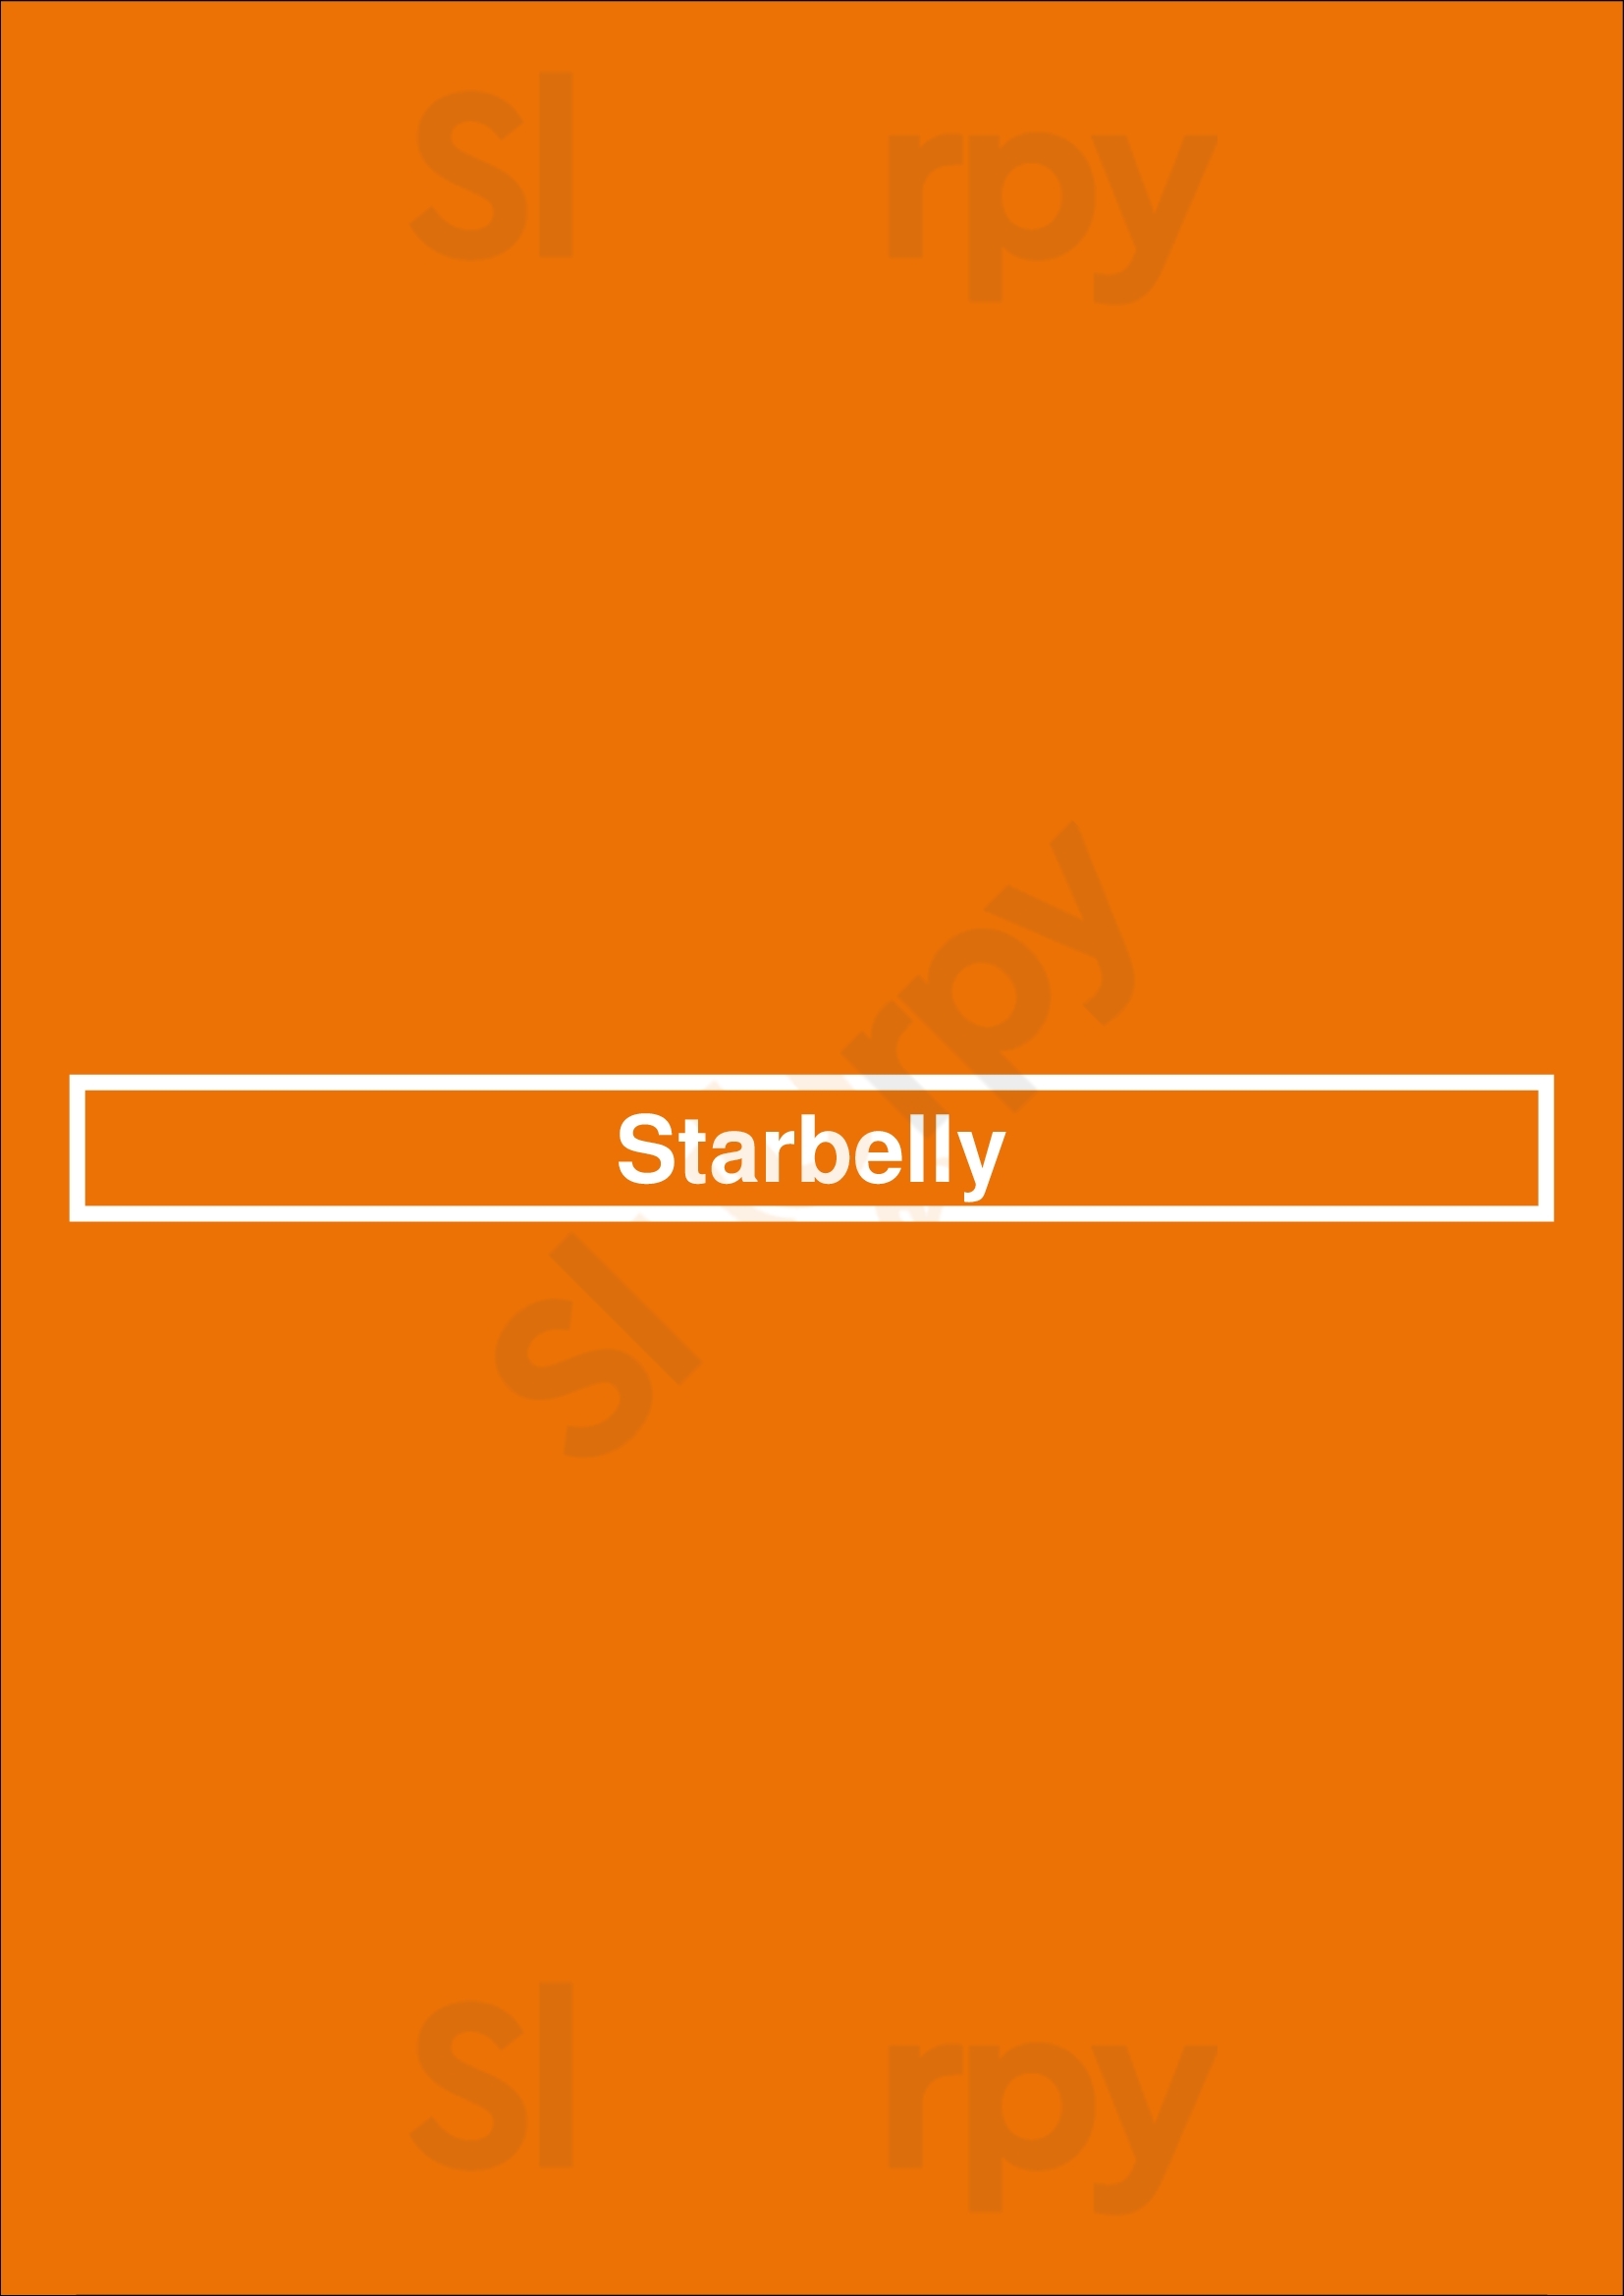 Starbelly Calgary Menu - 1